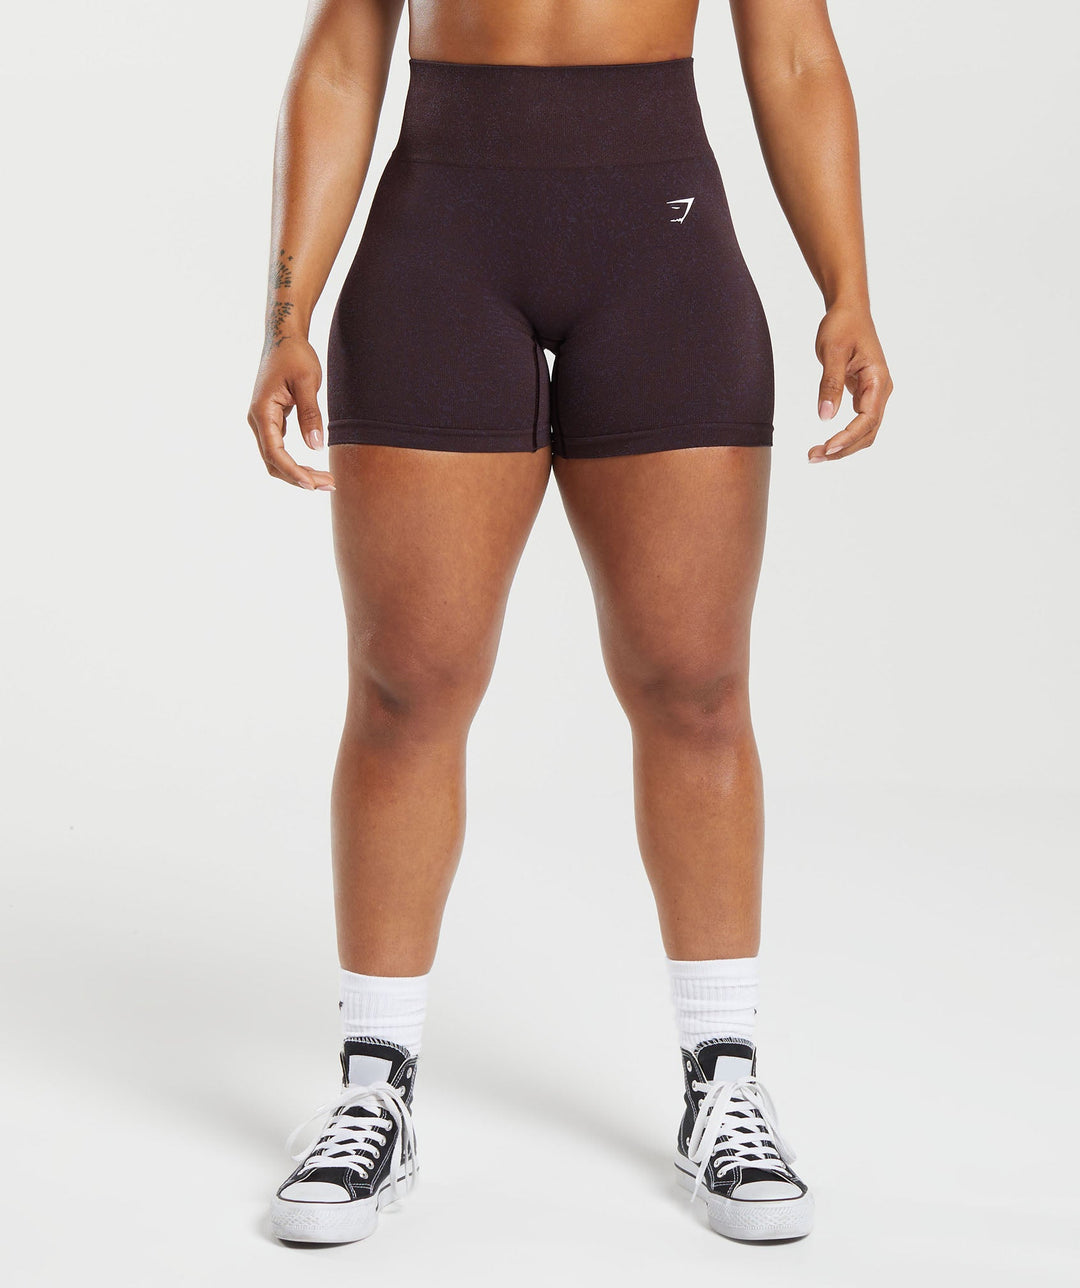 Women’s Gym Shorts & Workout Shorts - Gymshark